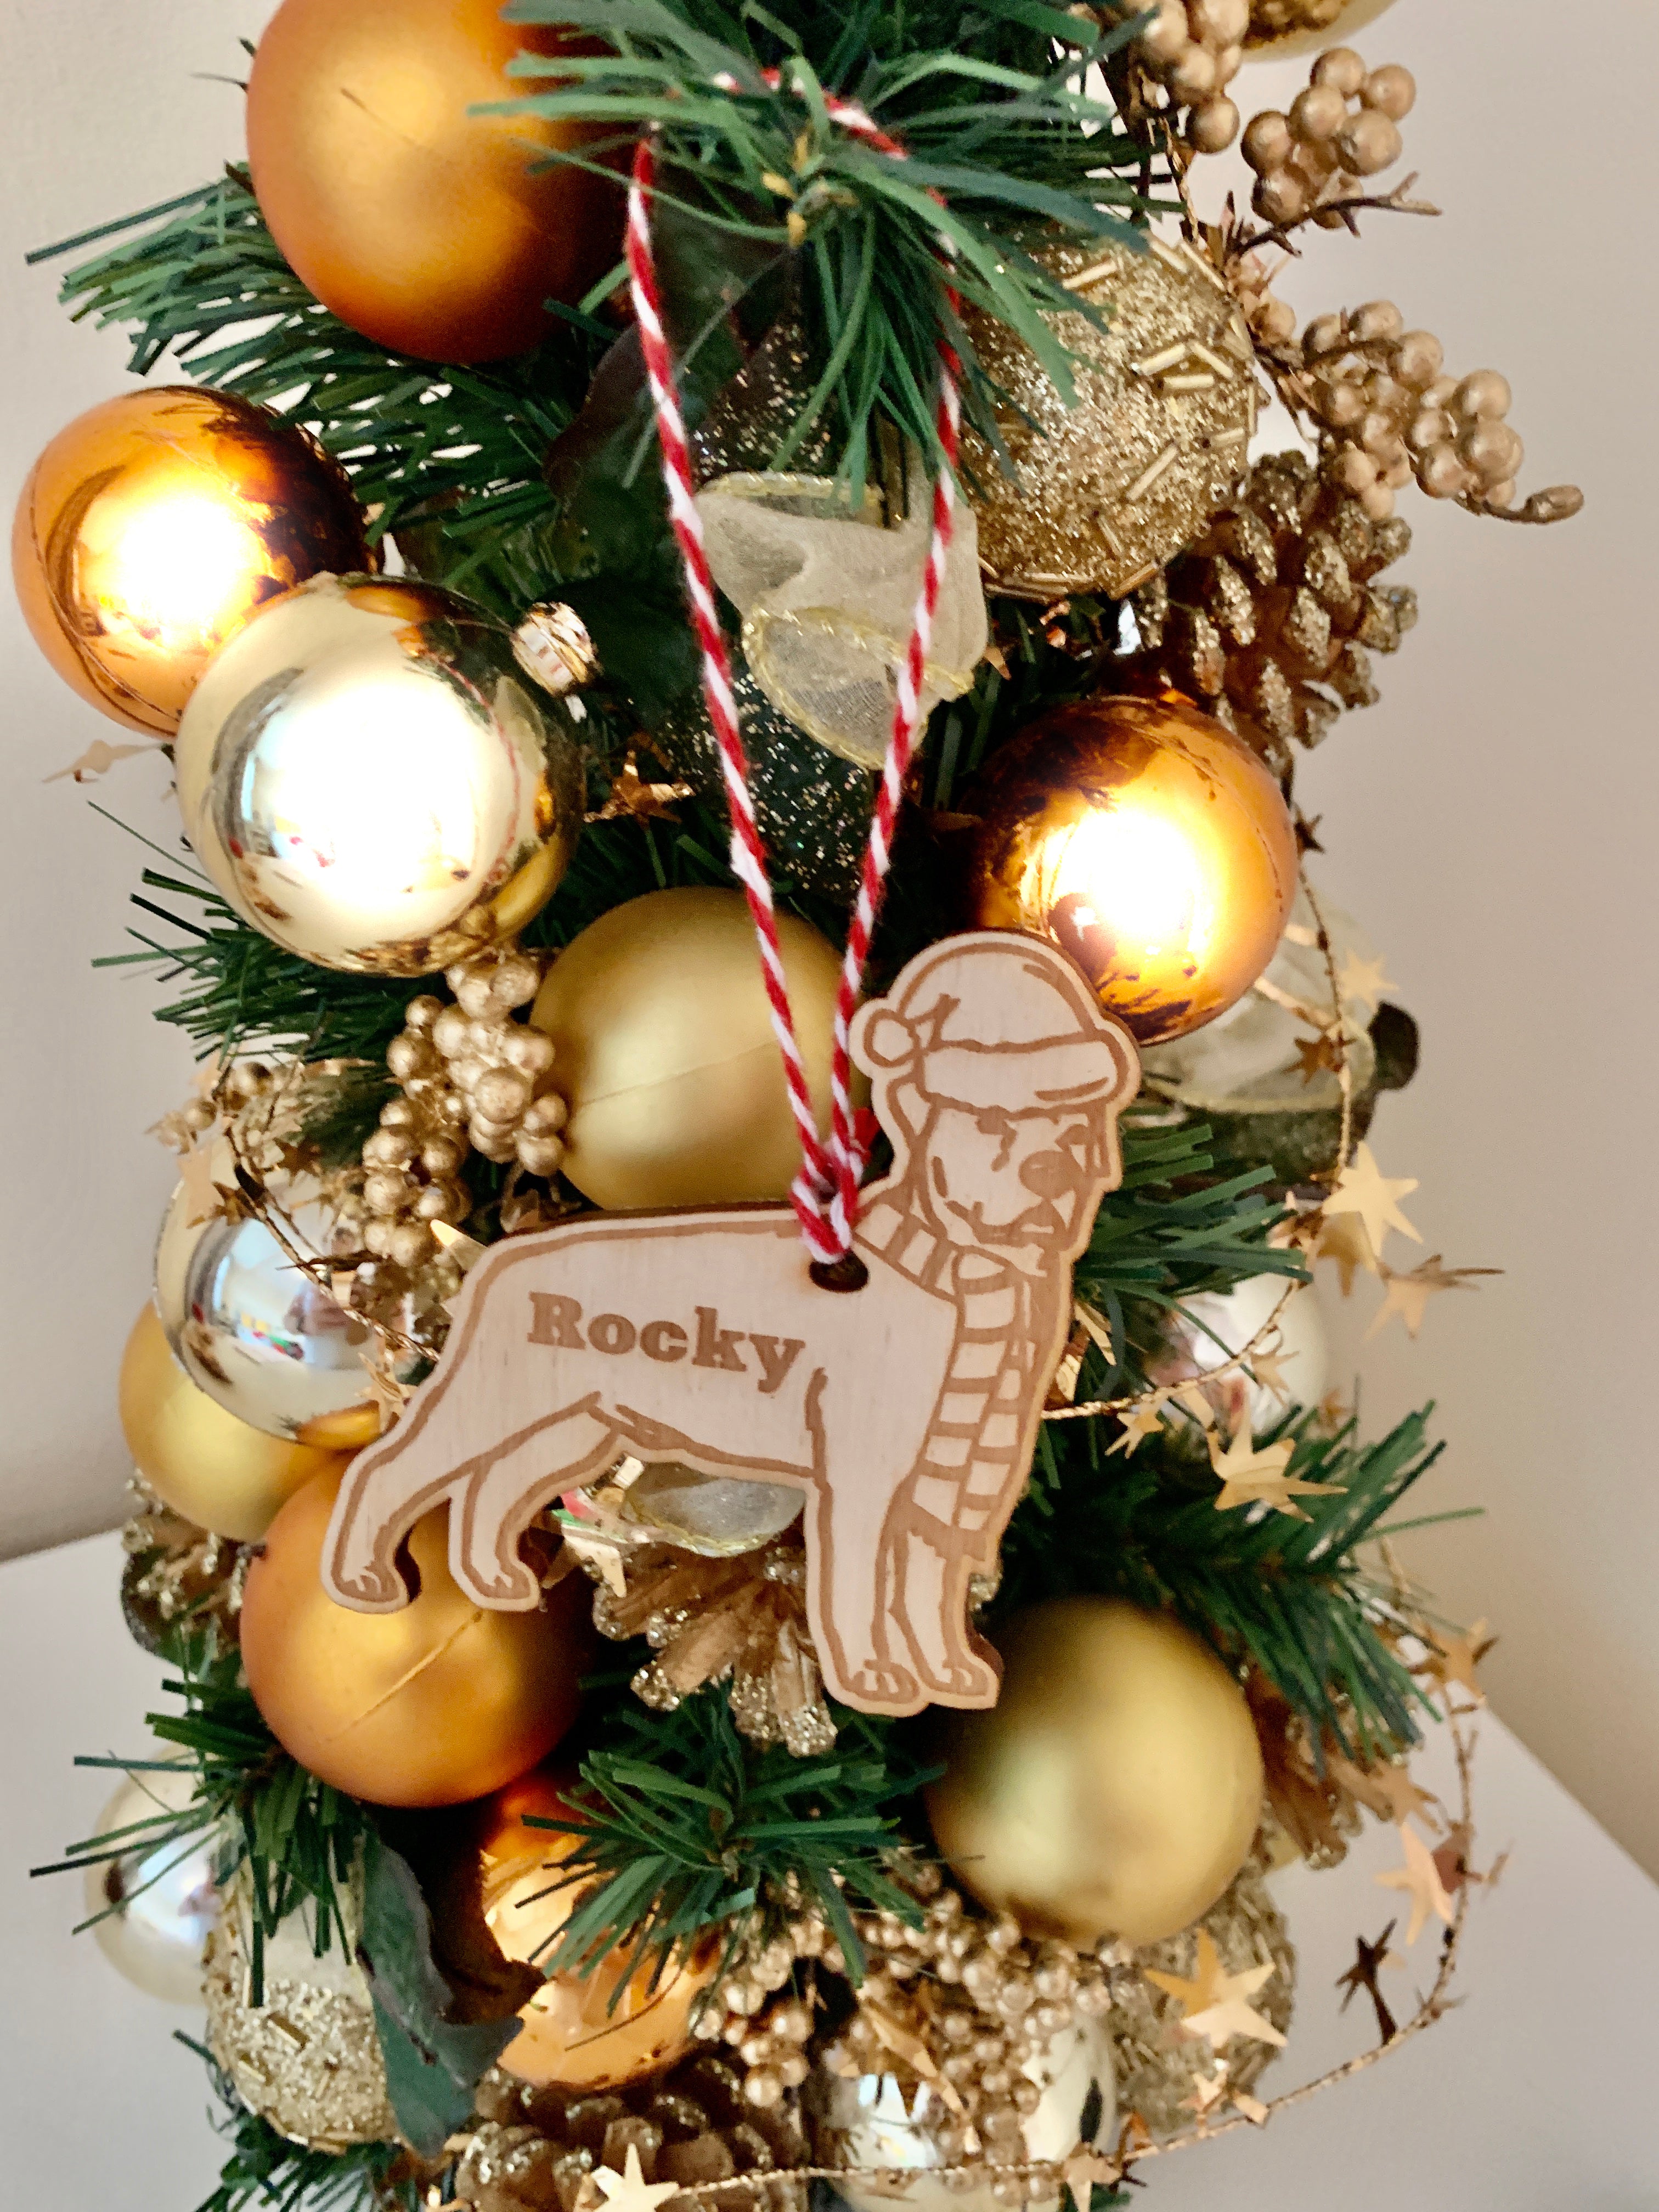 Rottweiler - Personalised Dog Christmas Tree Decoration Bauble